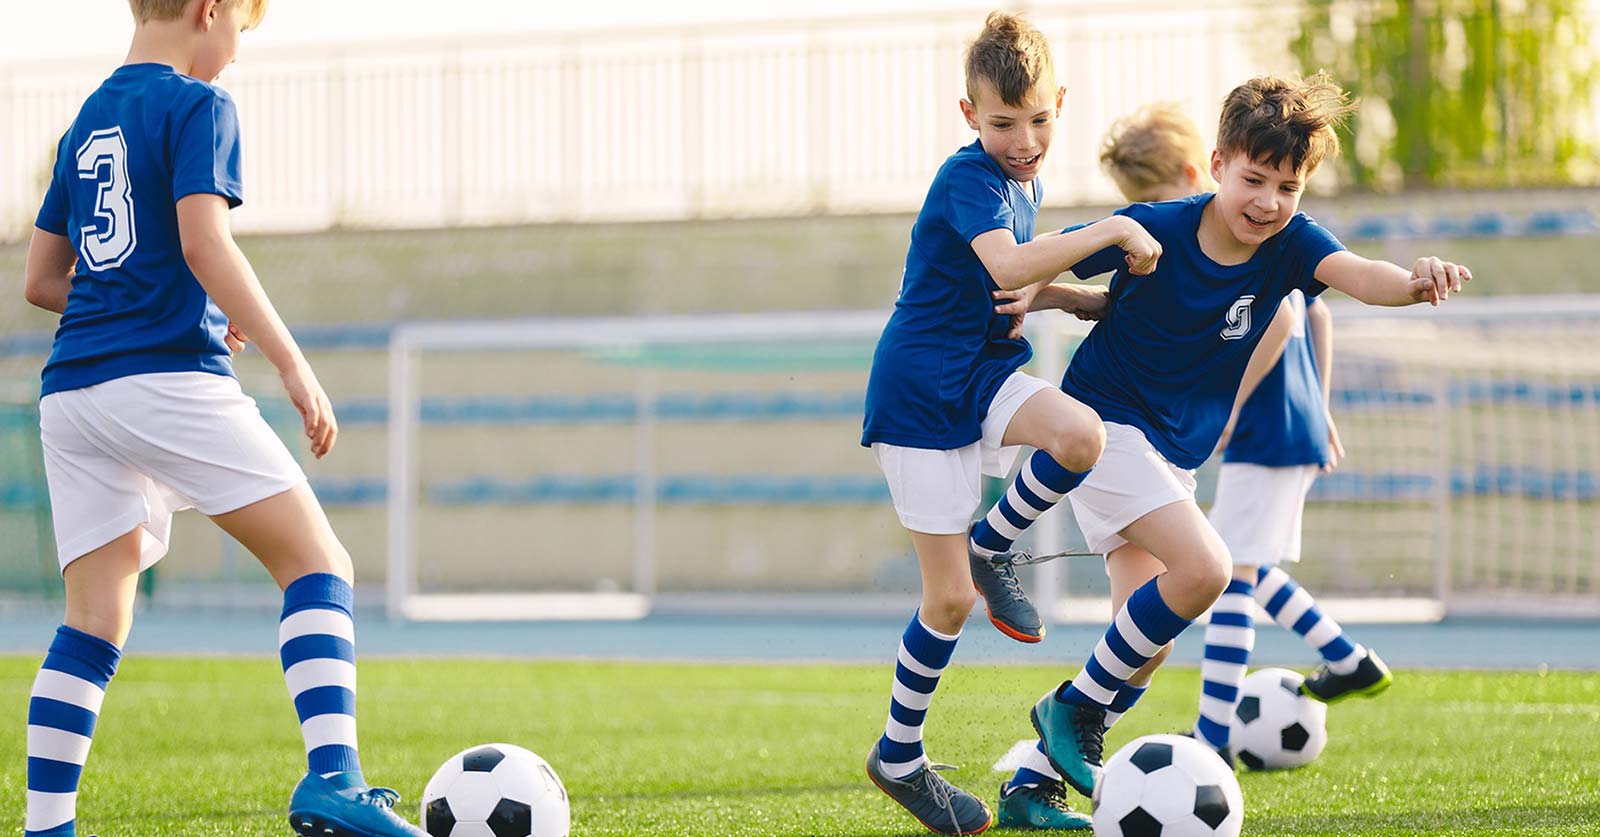 Preventing Soccer Injuries in Children